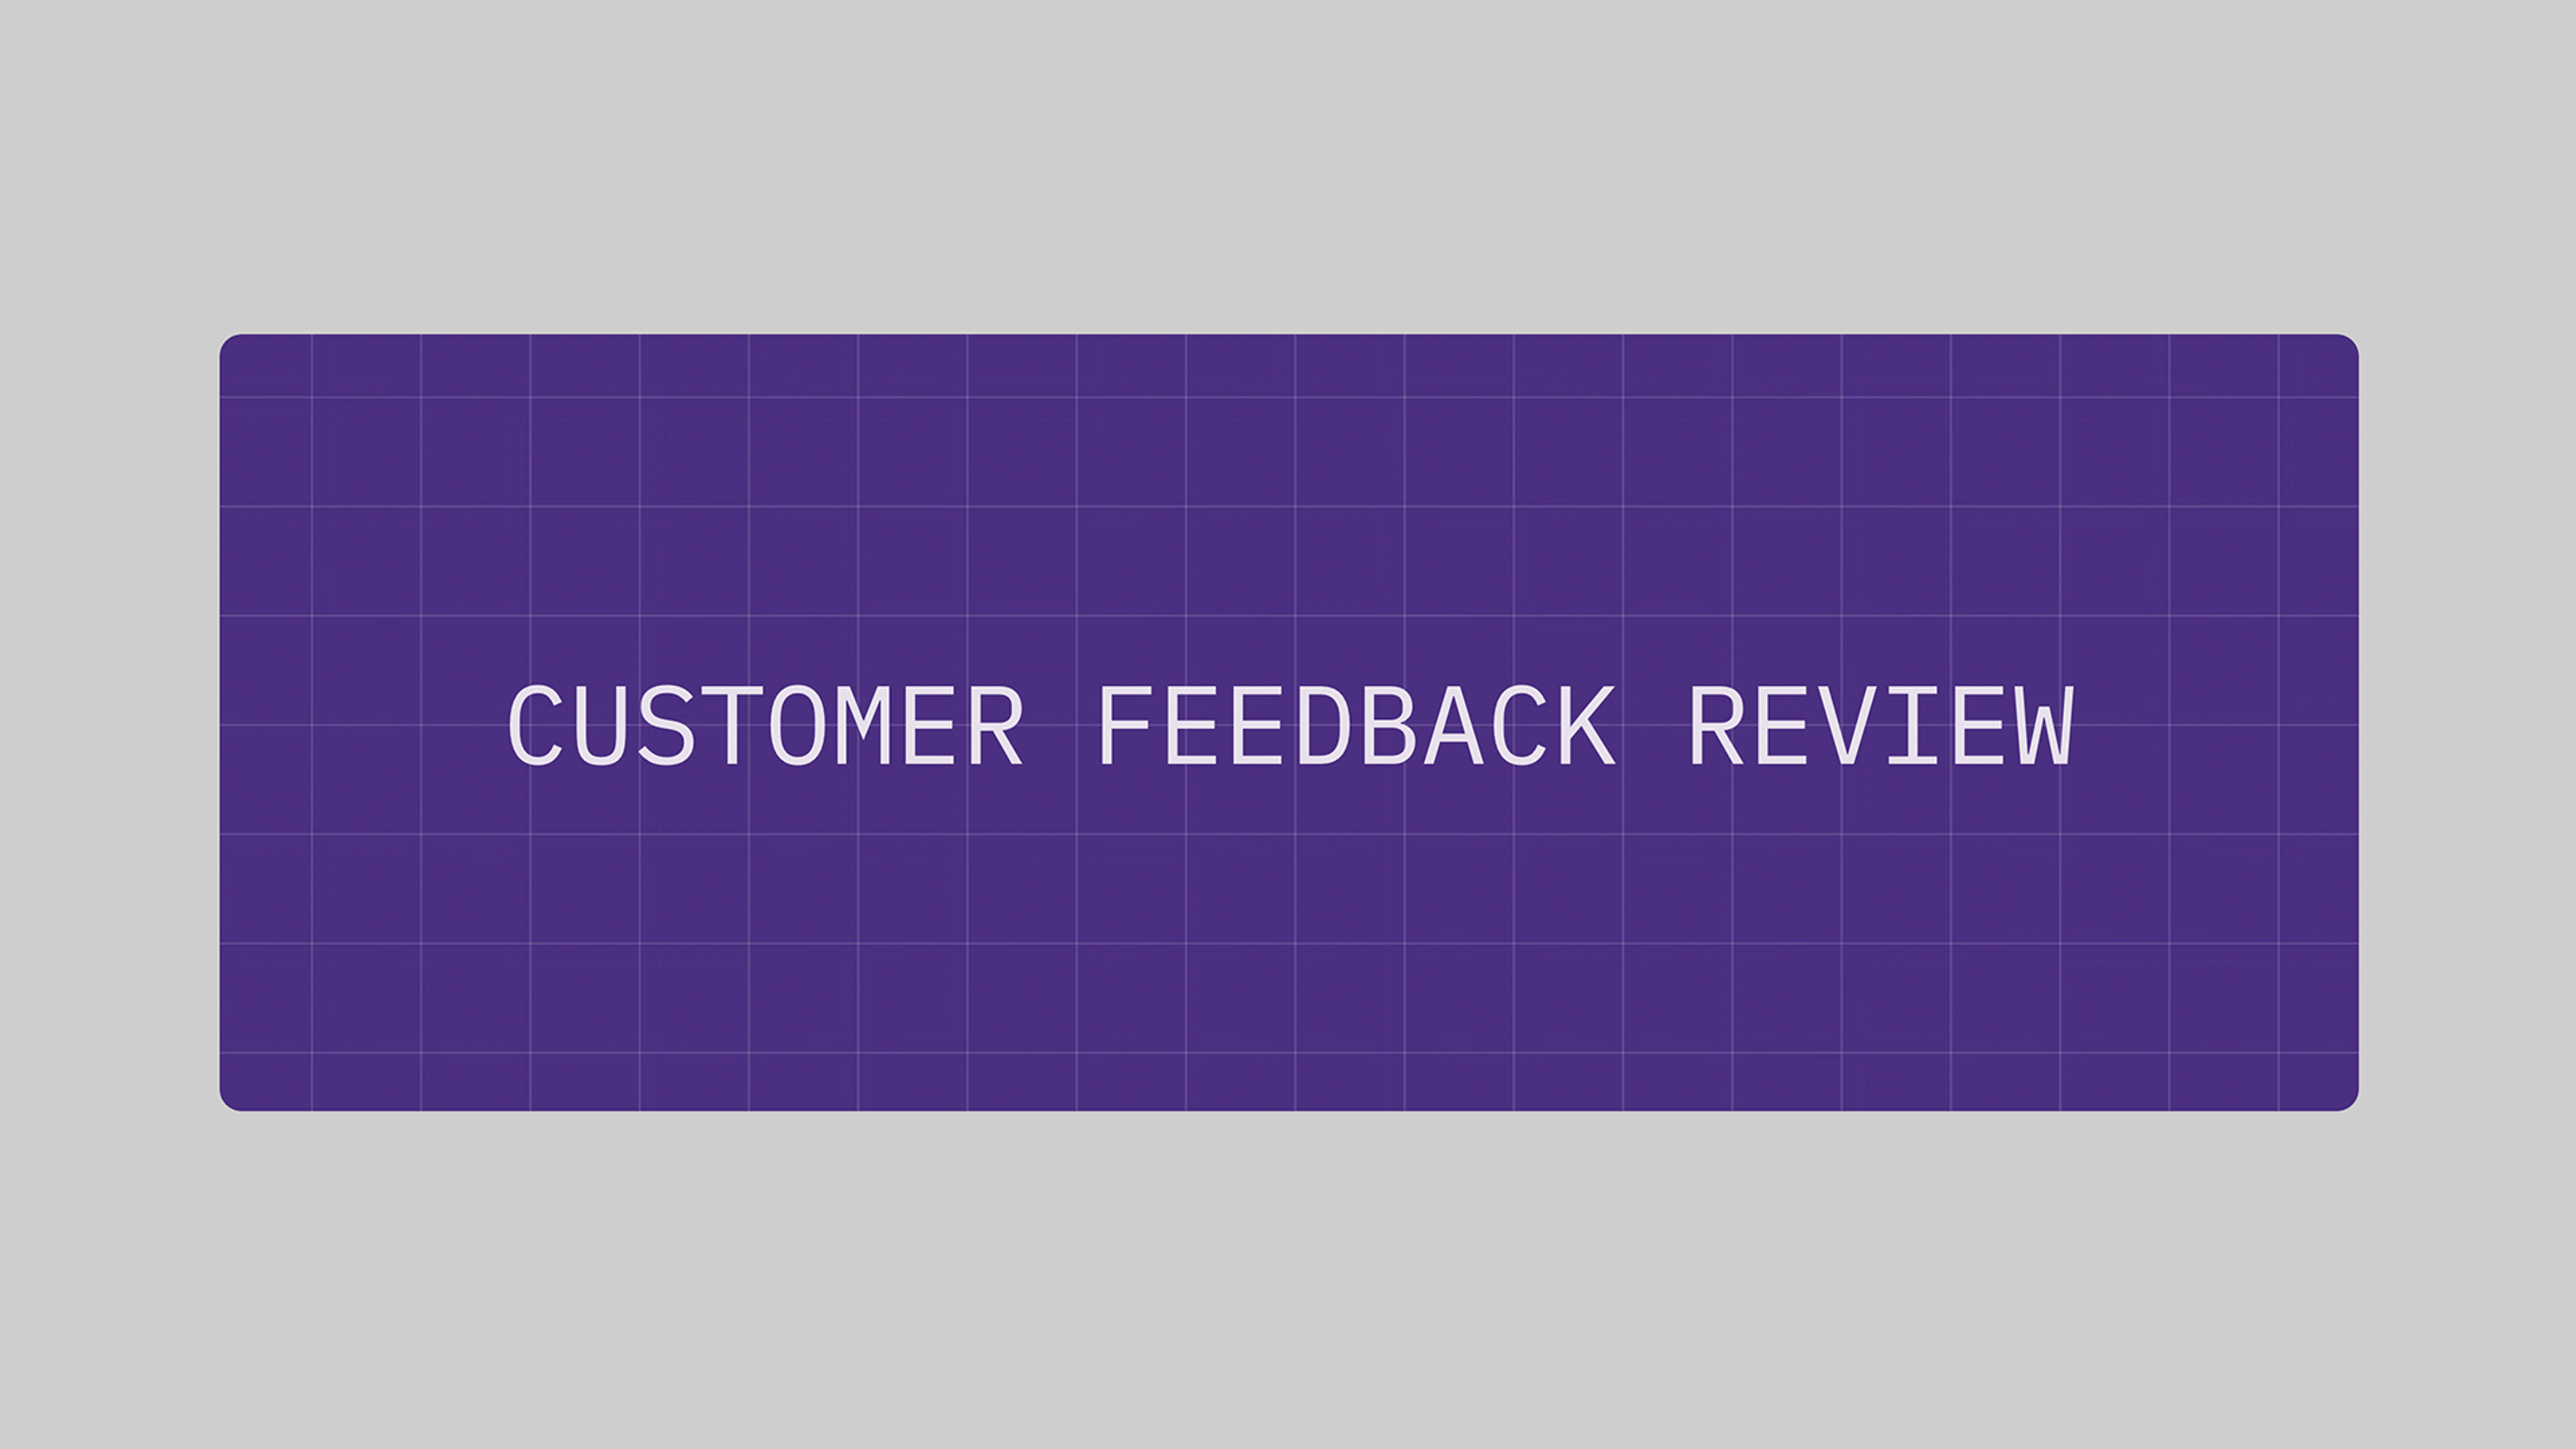 Customer Feedback Review - Intro